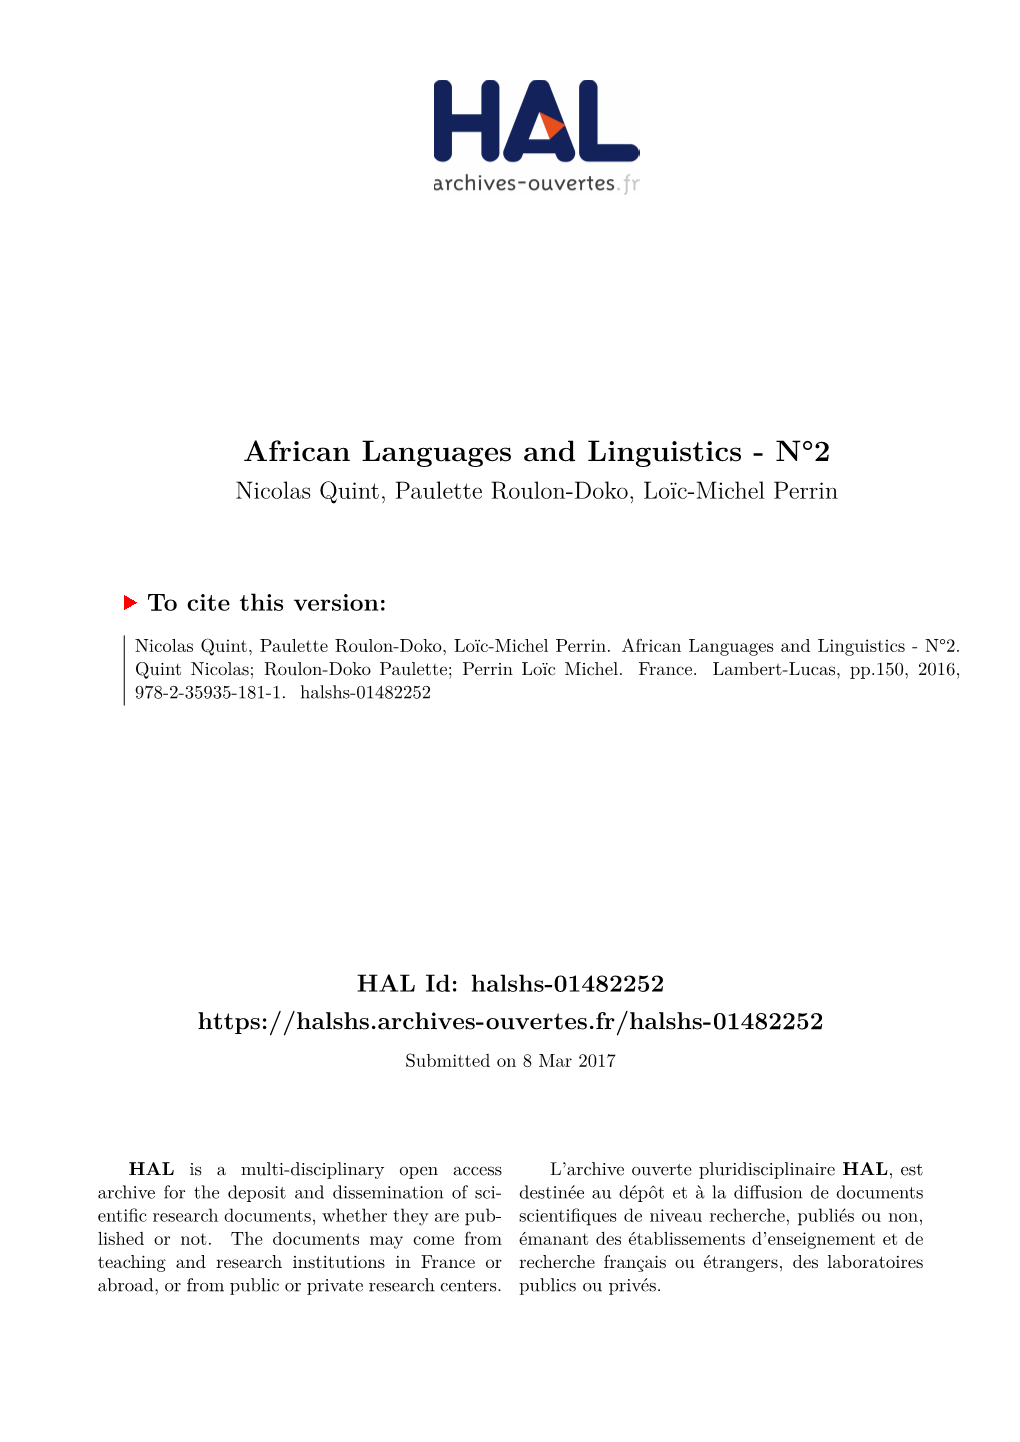 African Languages and Linguistics - N°2 Nicolas Quint, Paulette Roulon-Doko, Loïc-Michel Perrin